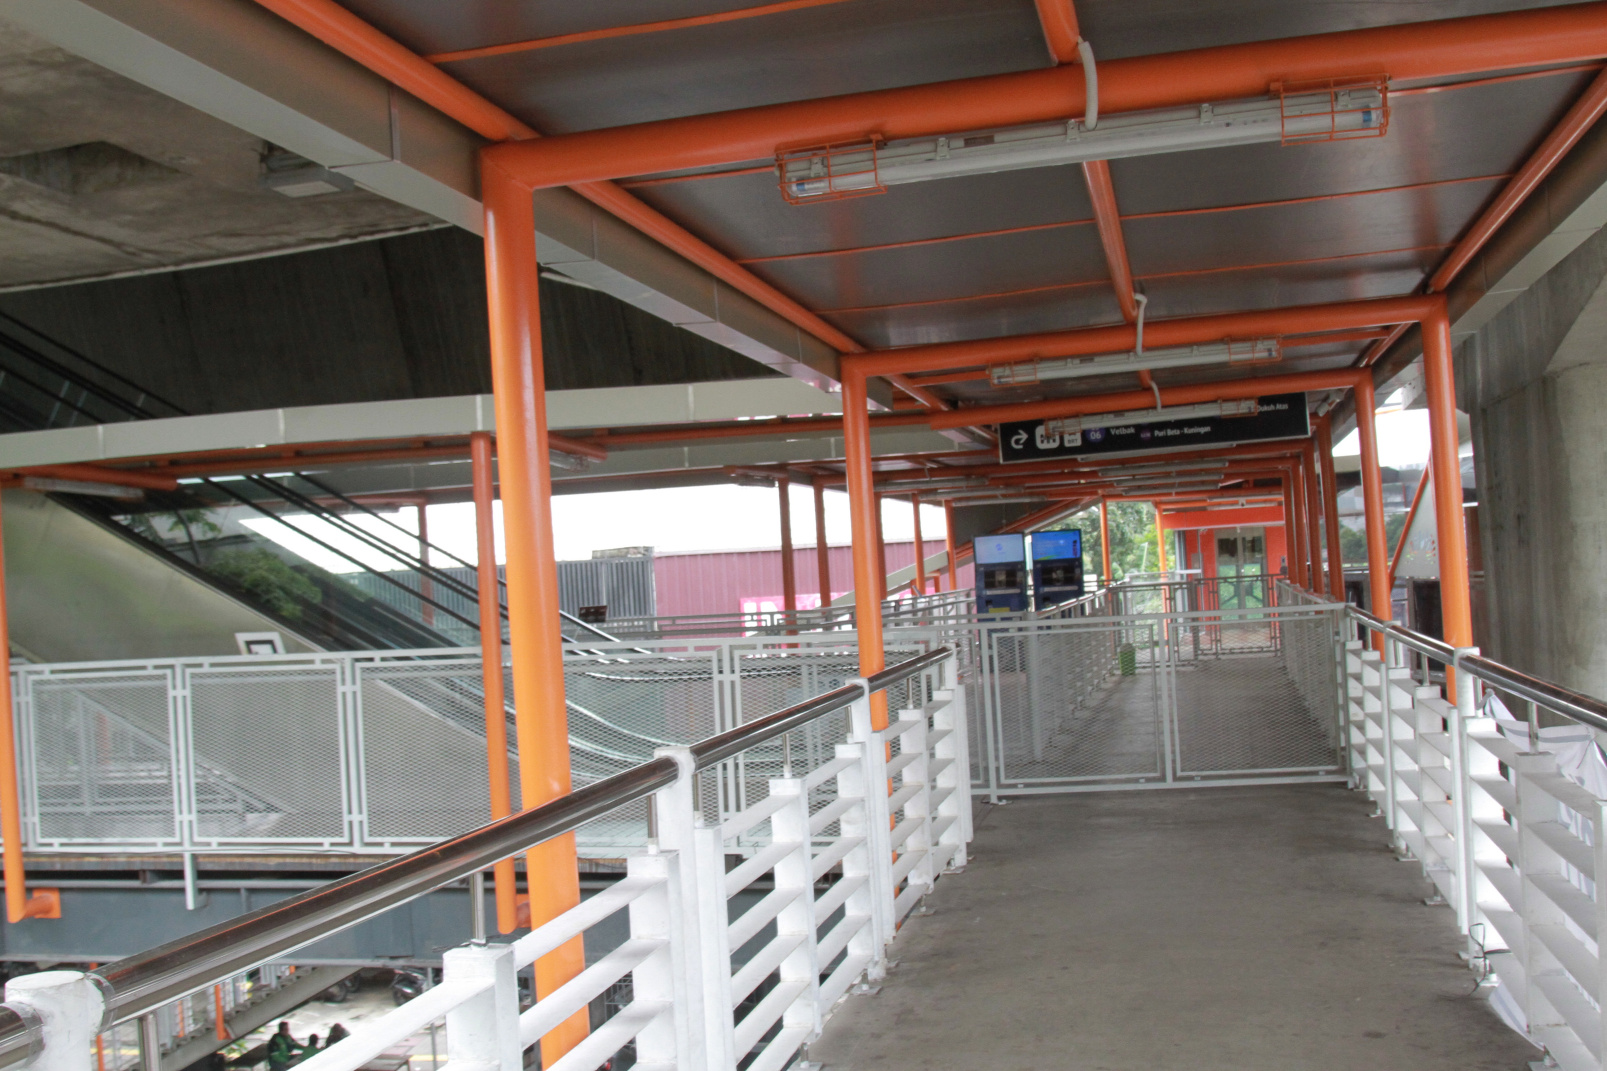 Pembangunan Skywalk Kebayoran Lama telah selesai dan segera diresmikan pekan depan (Ashar/SinPo.id)